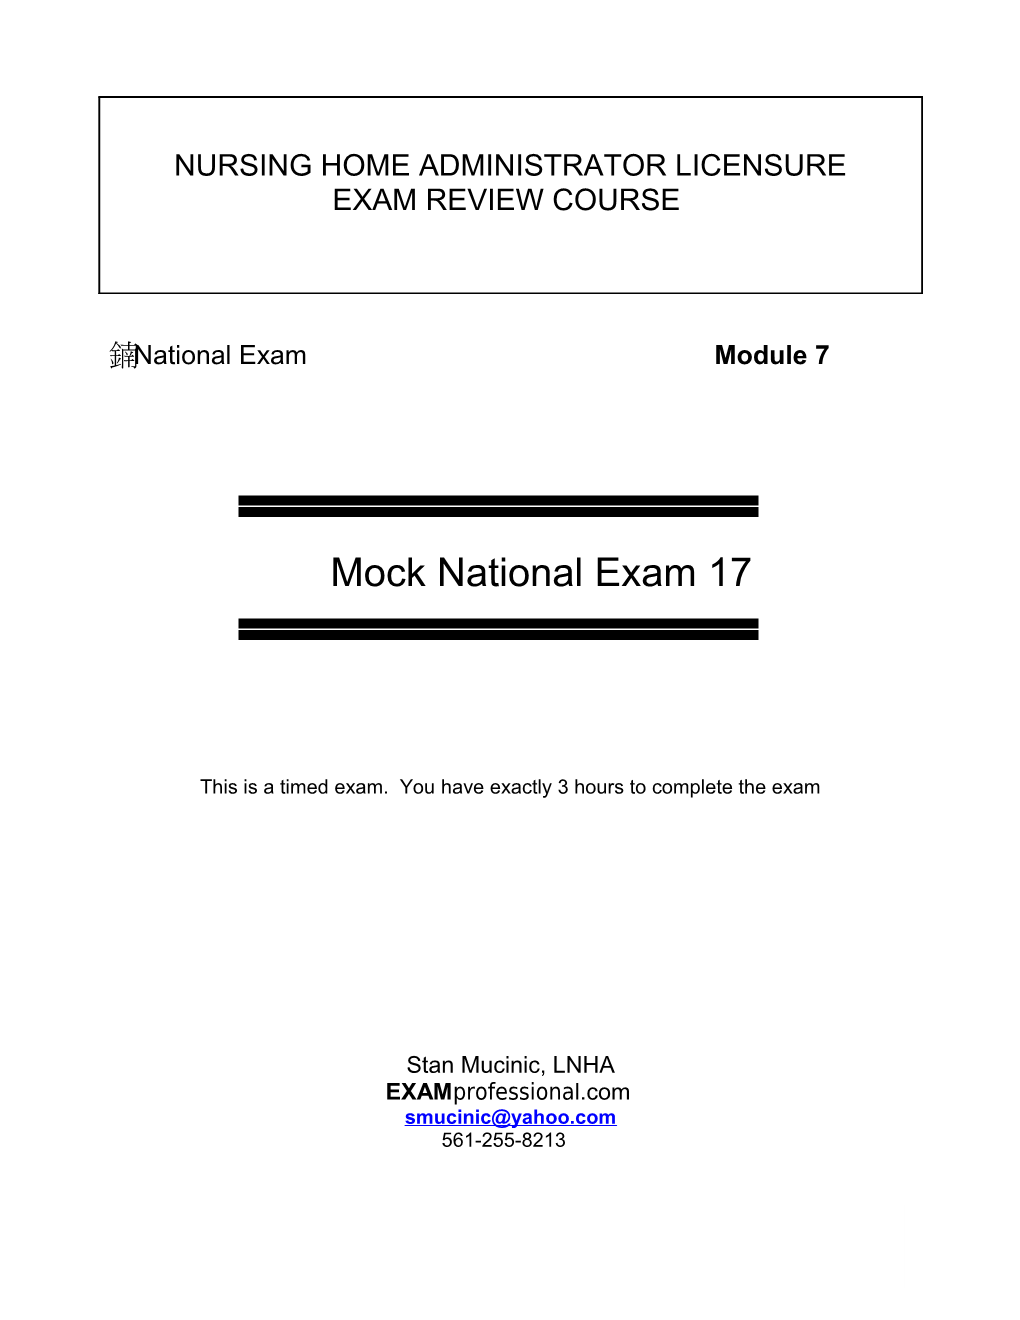 National Exam Supplemental Information Part 1 of 10